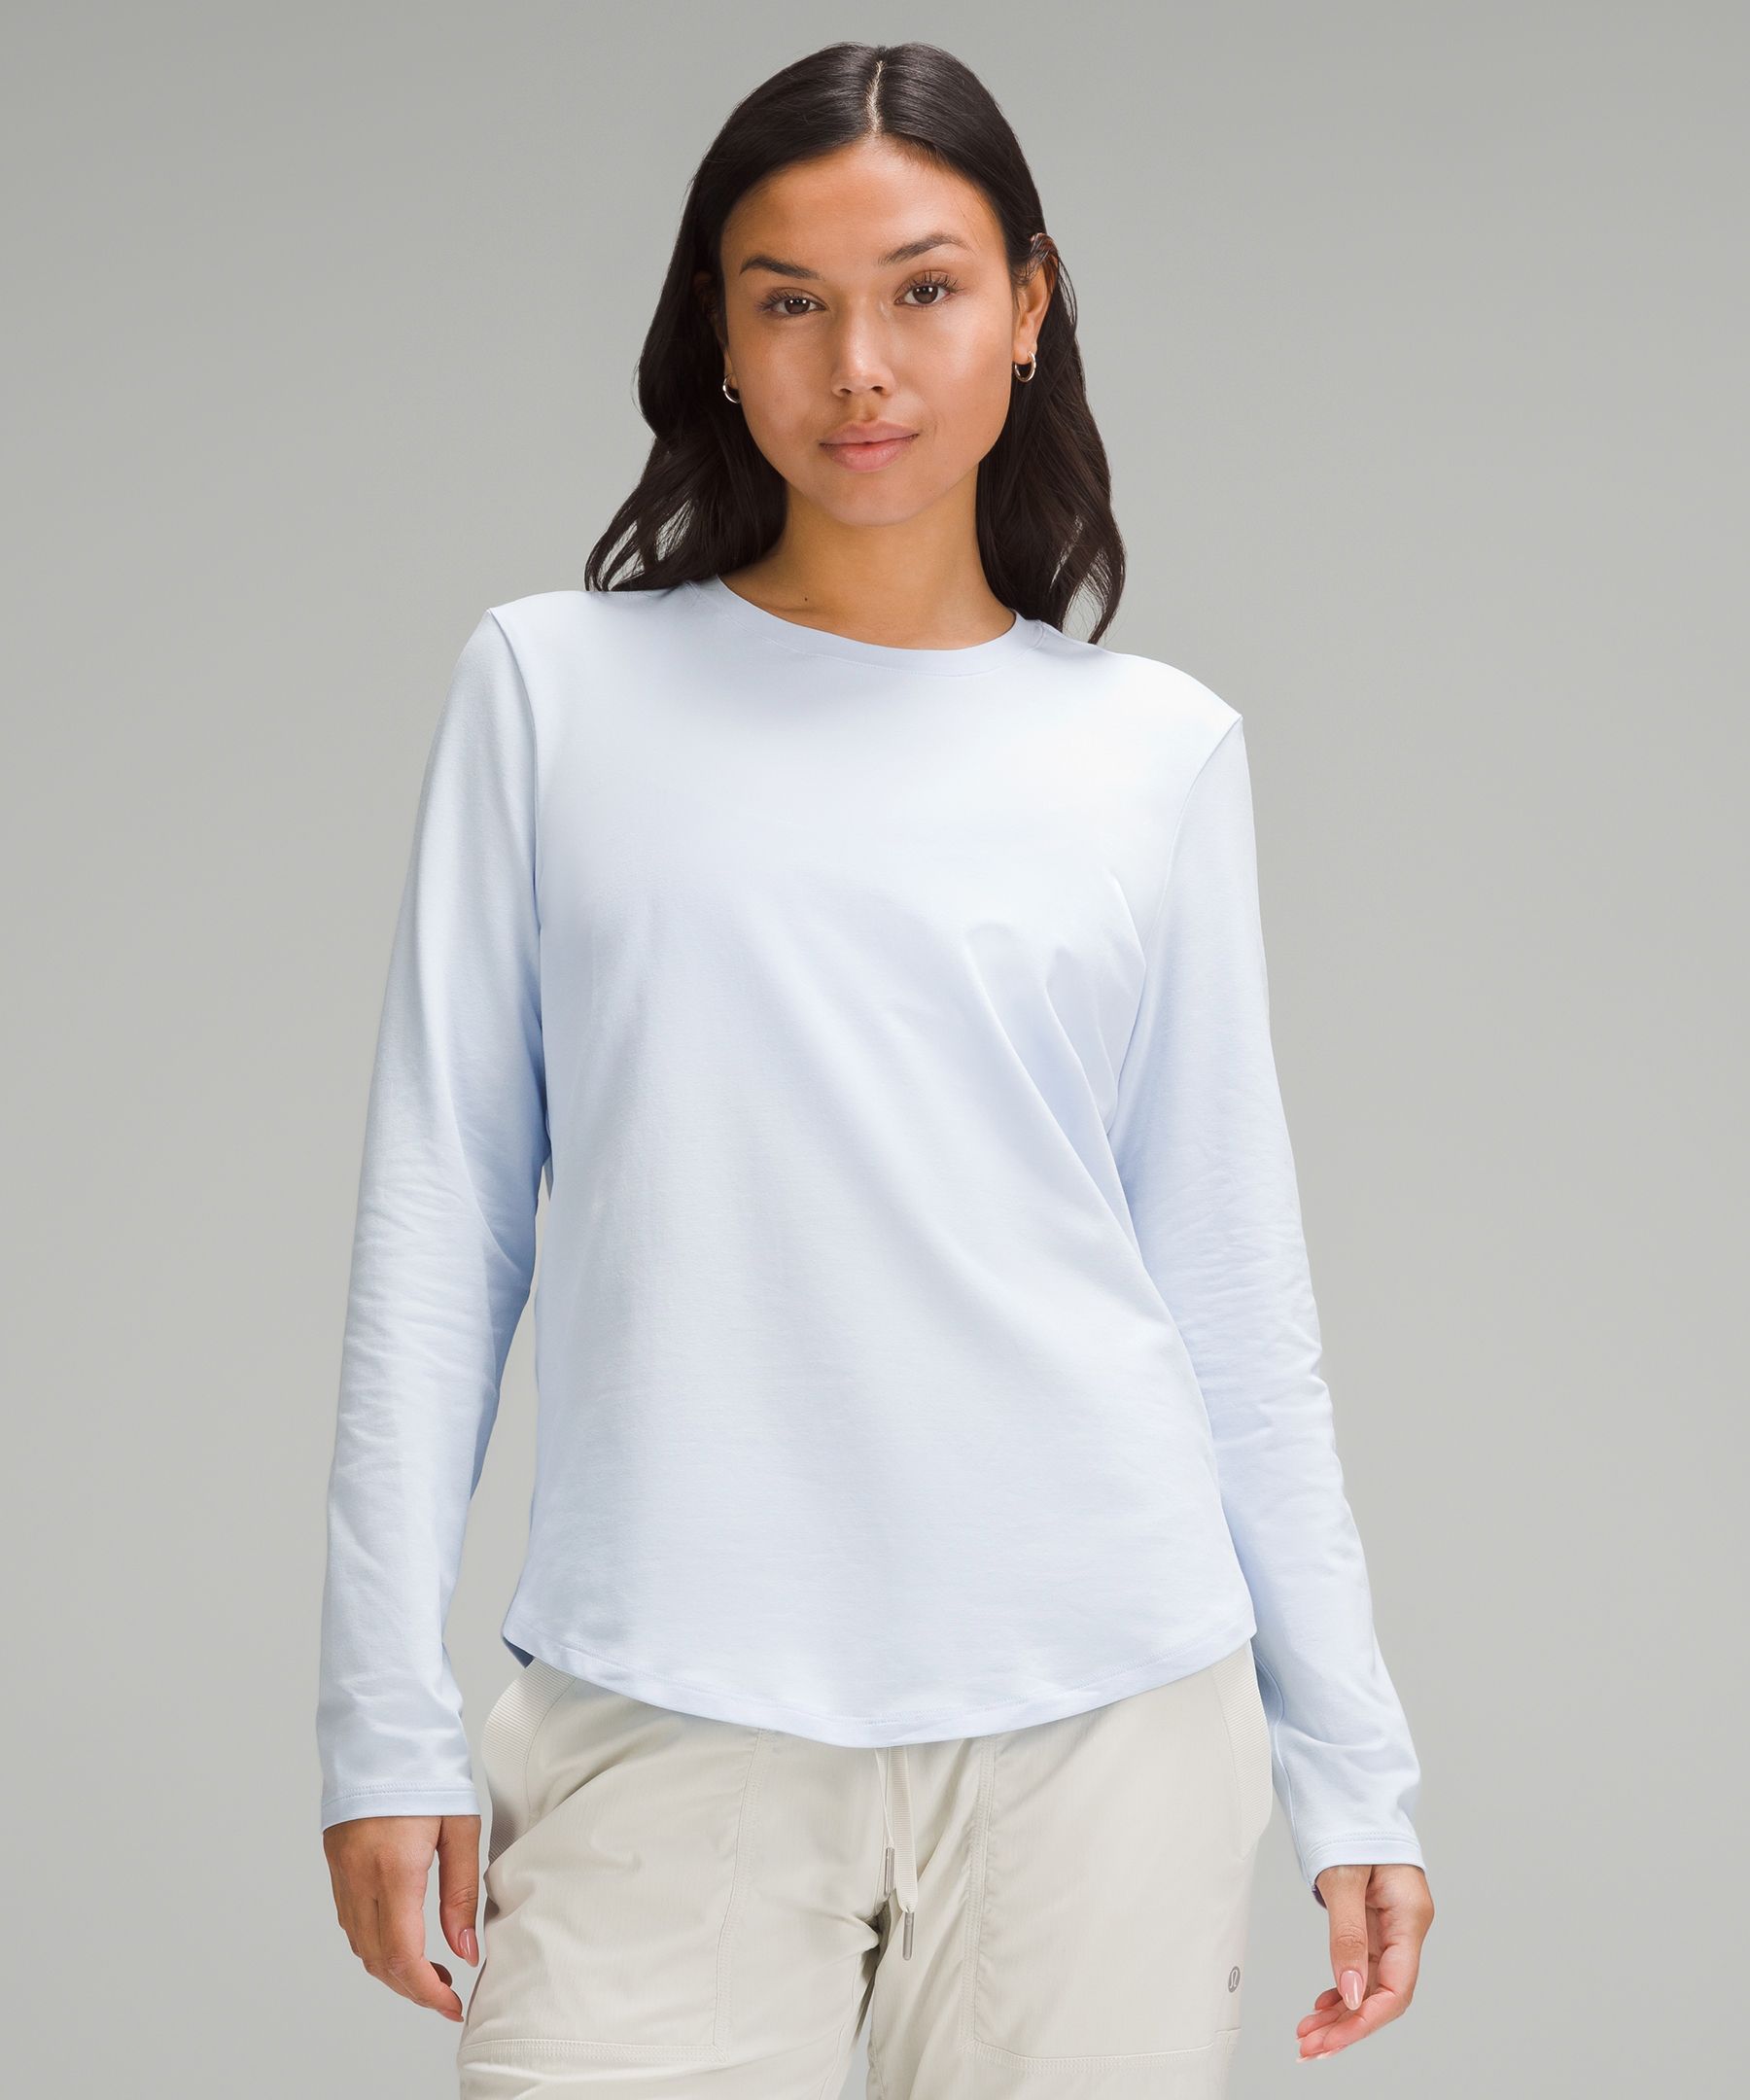 Lululemon Athletica Solid Black Long Sleeve T-Shirt Size 10 - 46